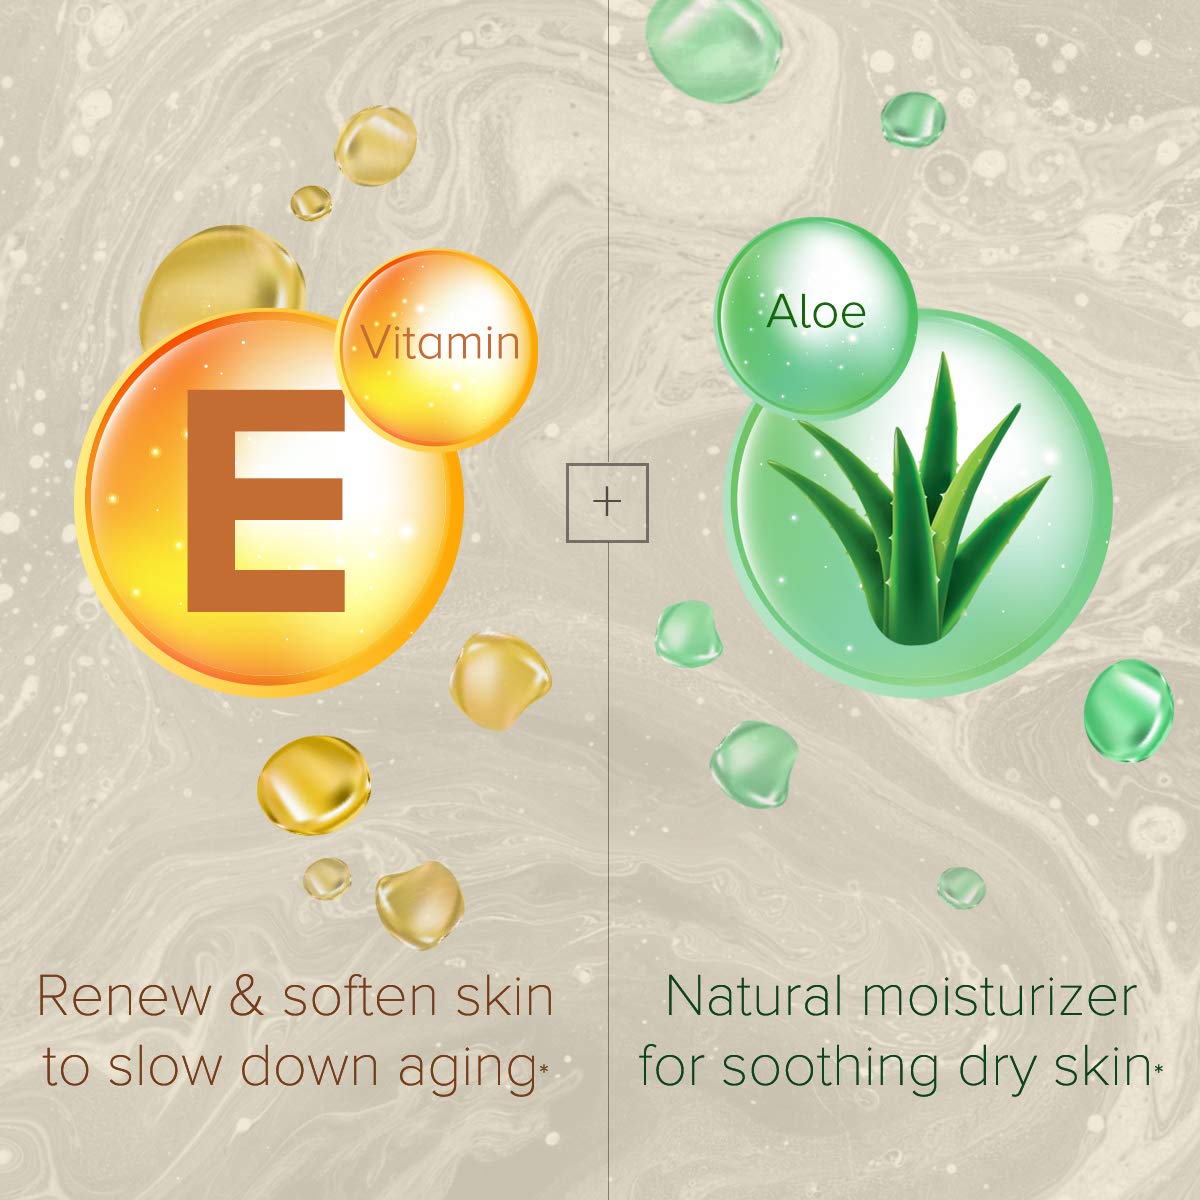 Sanar Naturals Healthy Skin Vitamin E Lotion with Aloe Vera Gel 60 ct - Face Serum Capsules - Reduce Wrinkles, Dark Spots - Rapid Skin Repair Moisturizer for Smooth Skin